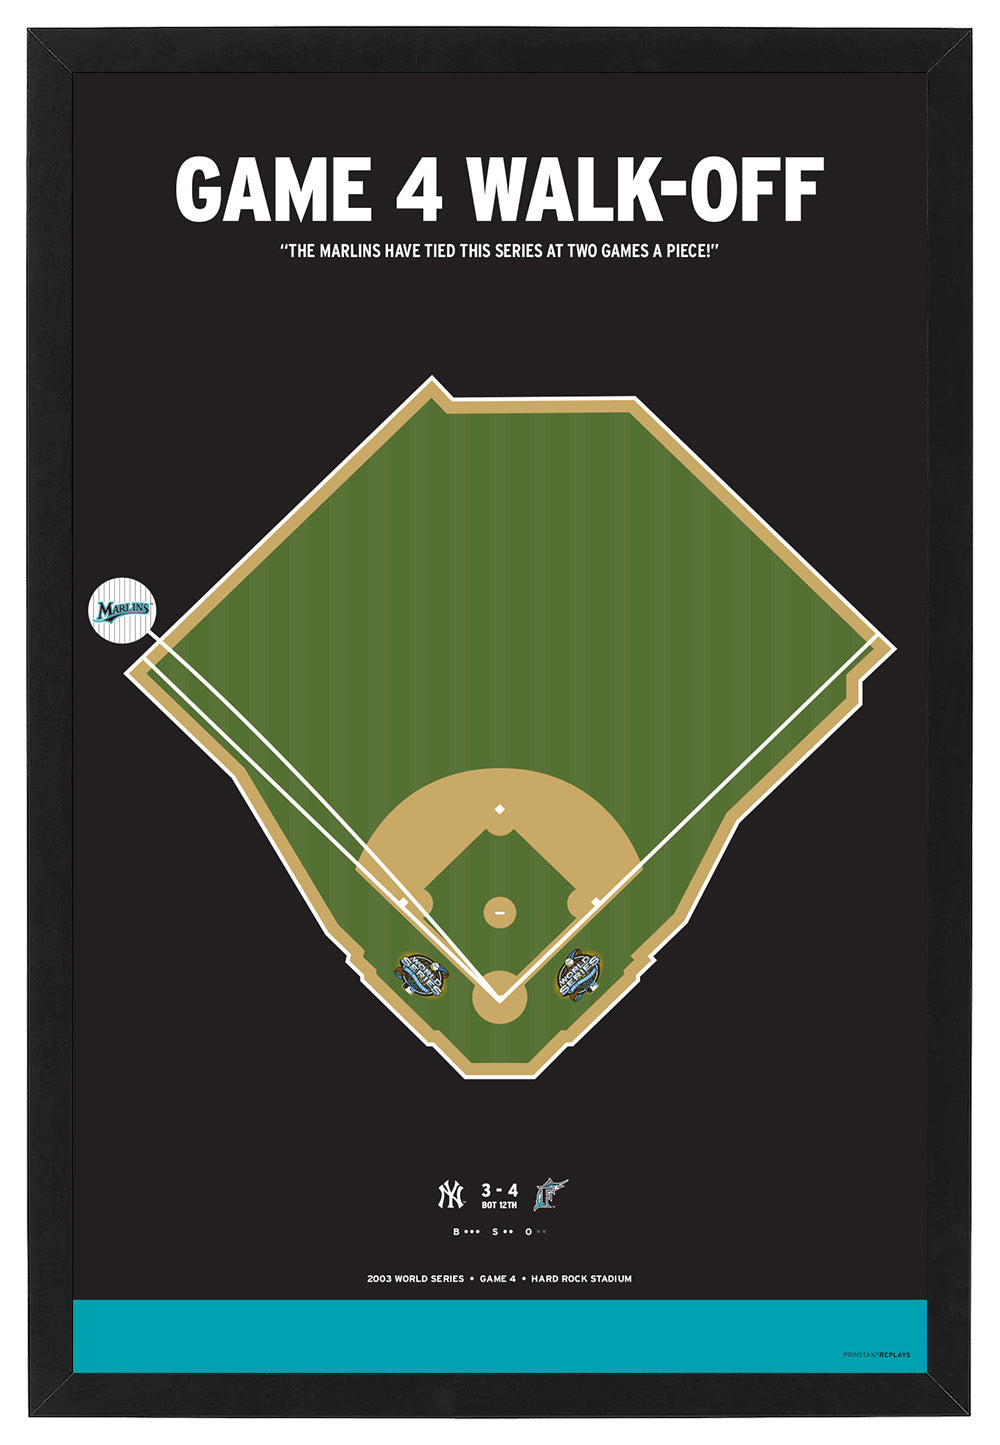 Marlins World Series Game 4 Walk-Off Print